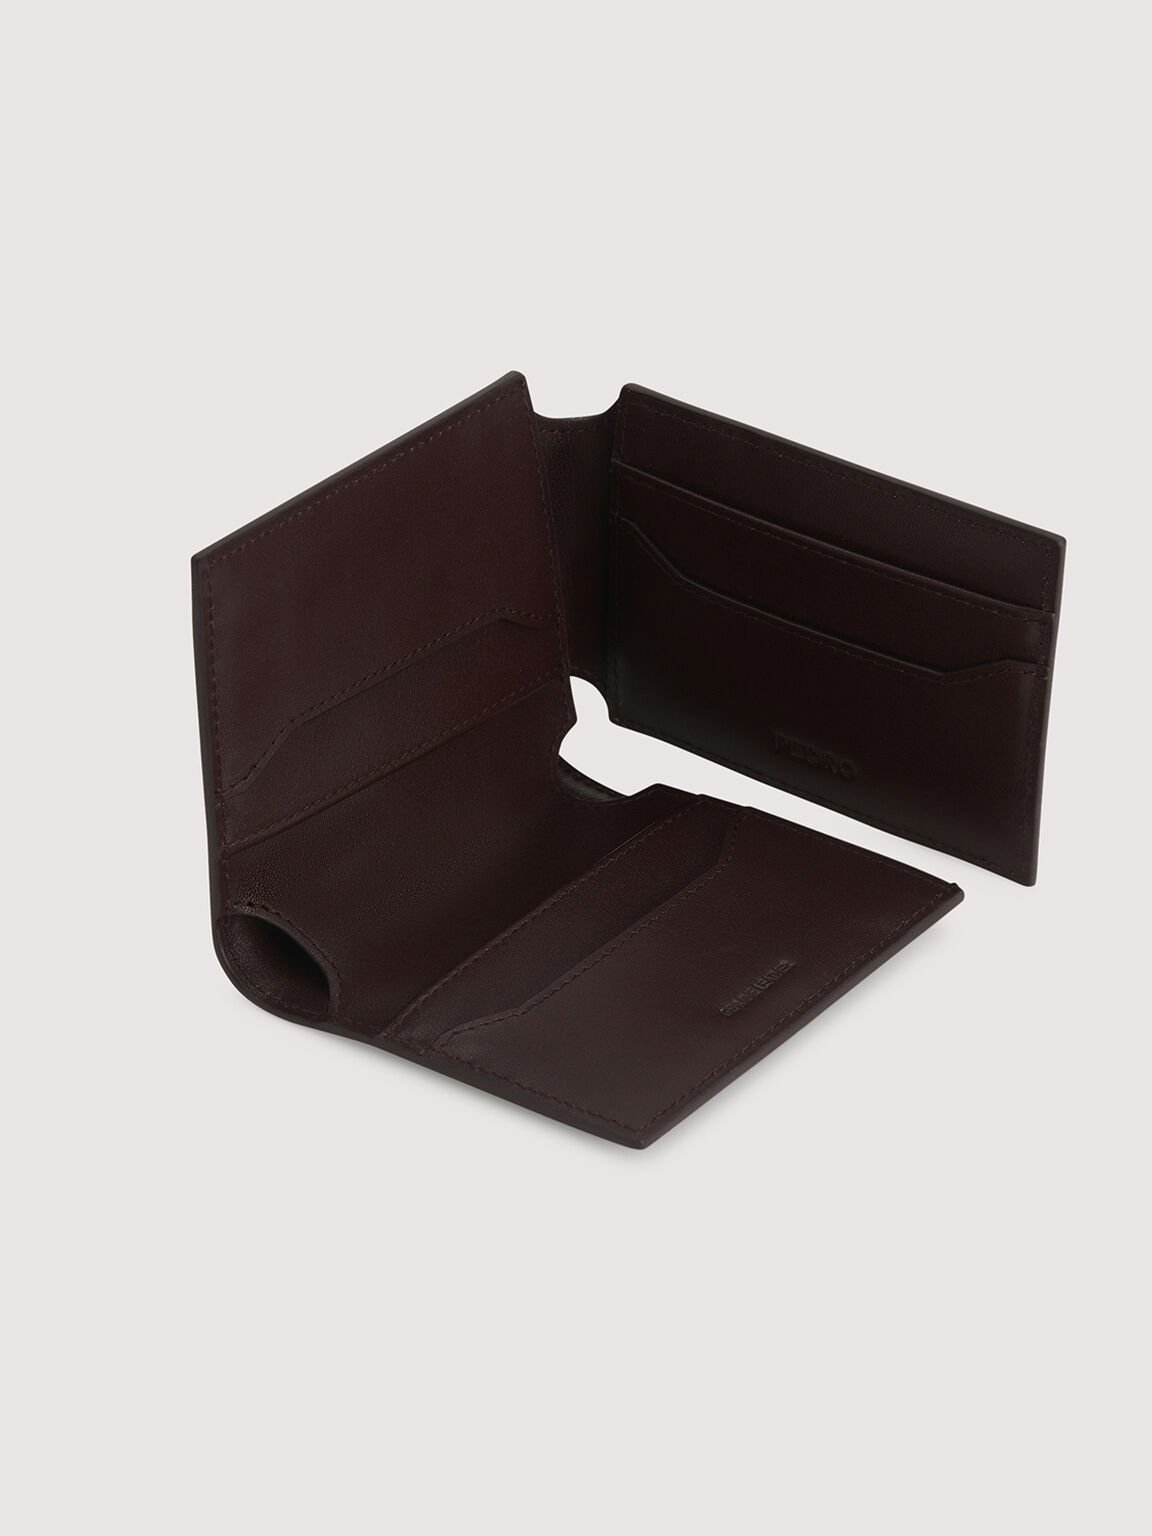 Leather Bi-Fold Cardholder, Dark Brown